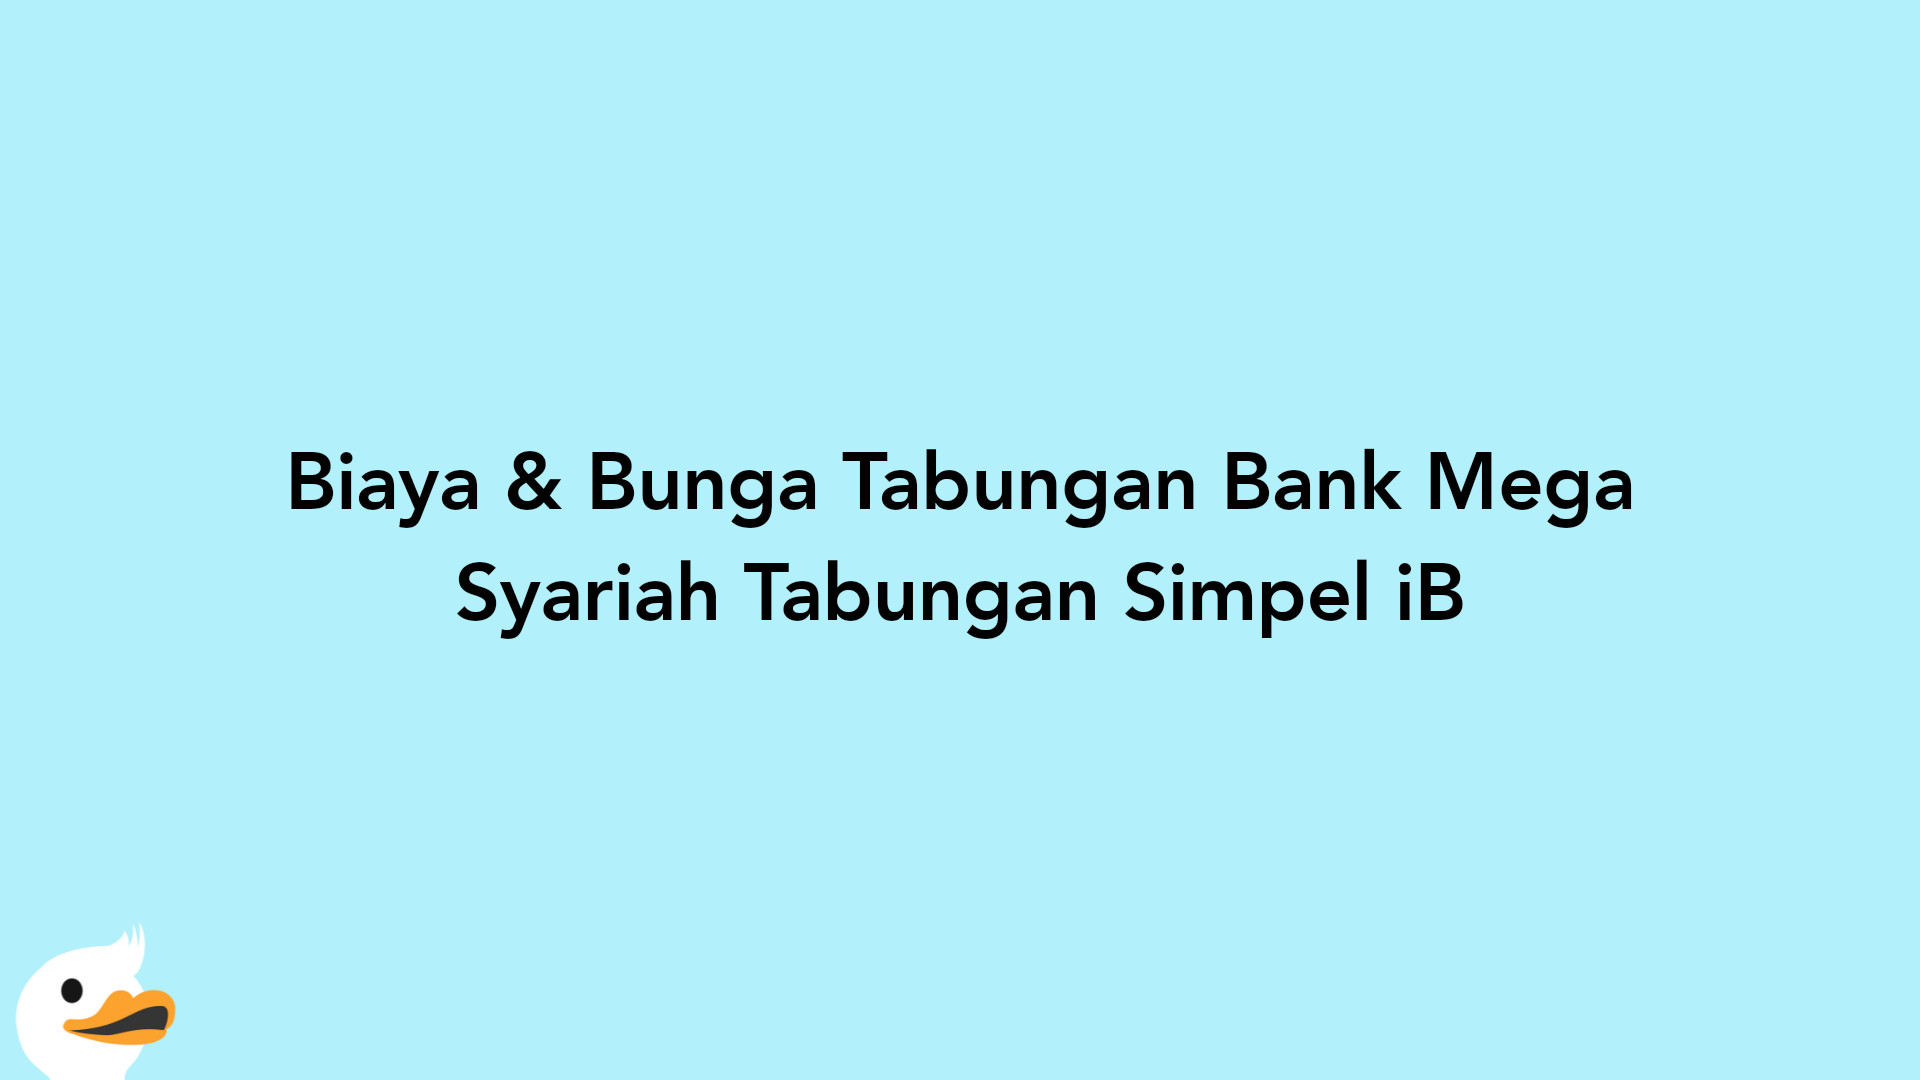 Biaya & Bunga Tabungan Bank Mega Syariah Tabungan Simpel iB